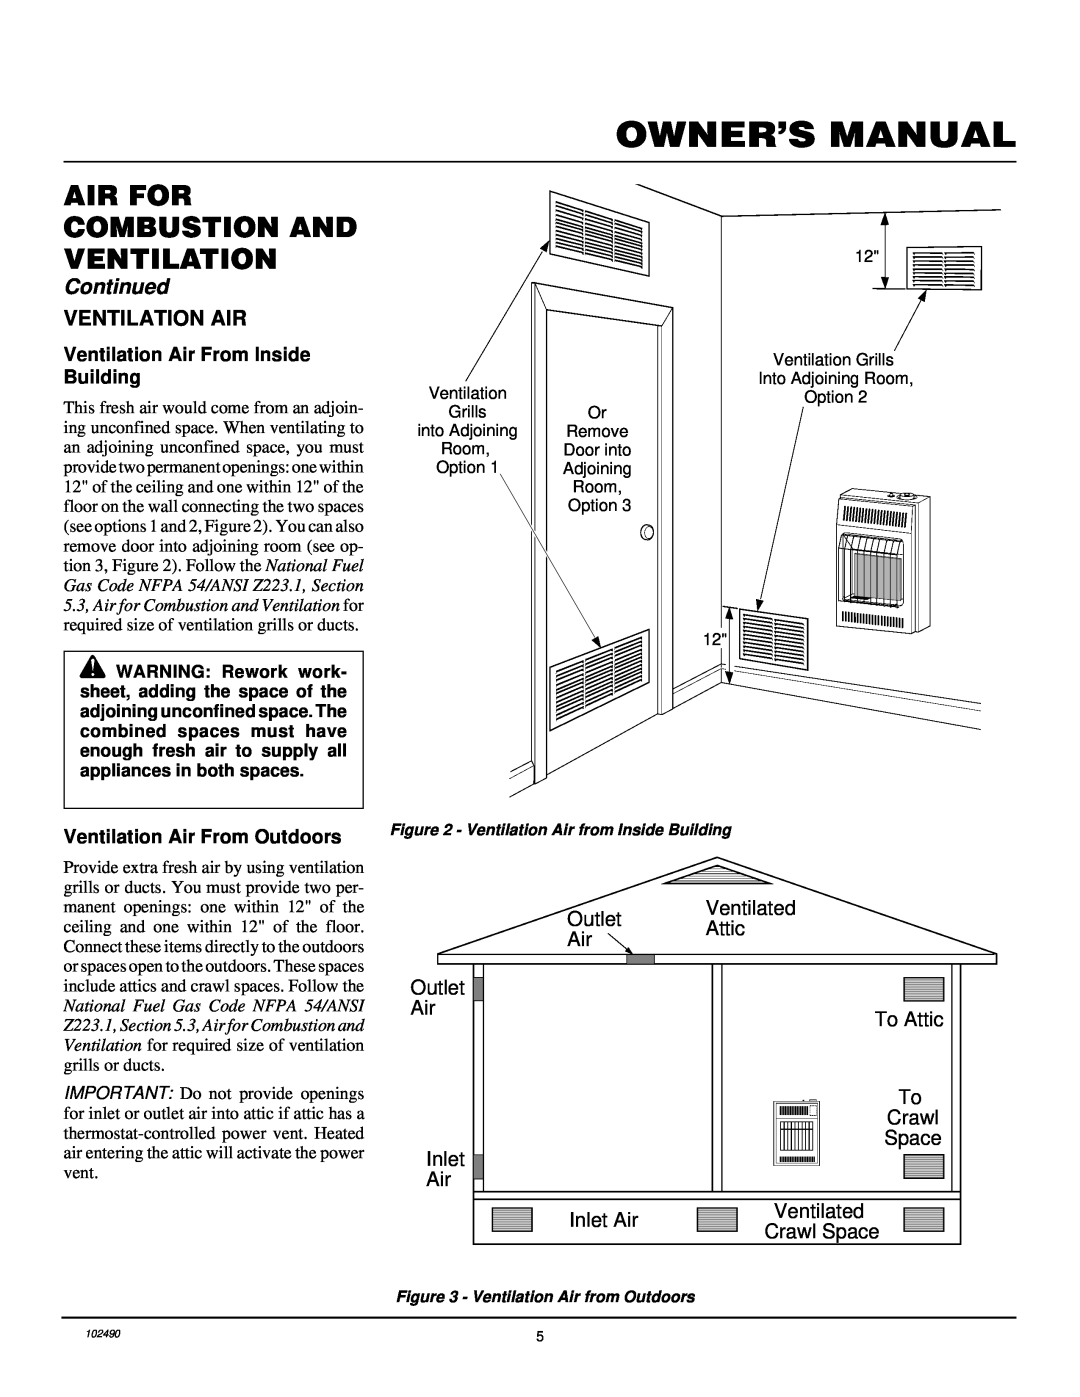 Desa VN10T Ventilation Air From Inside Building, Ventilation Air From Outdoors, Owner’S Manual, Continued, Outlet 